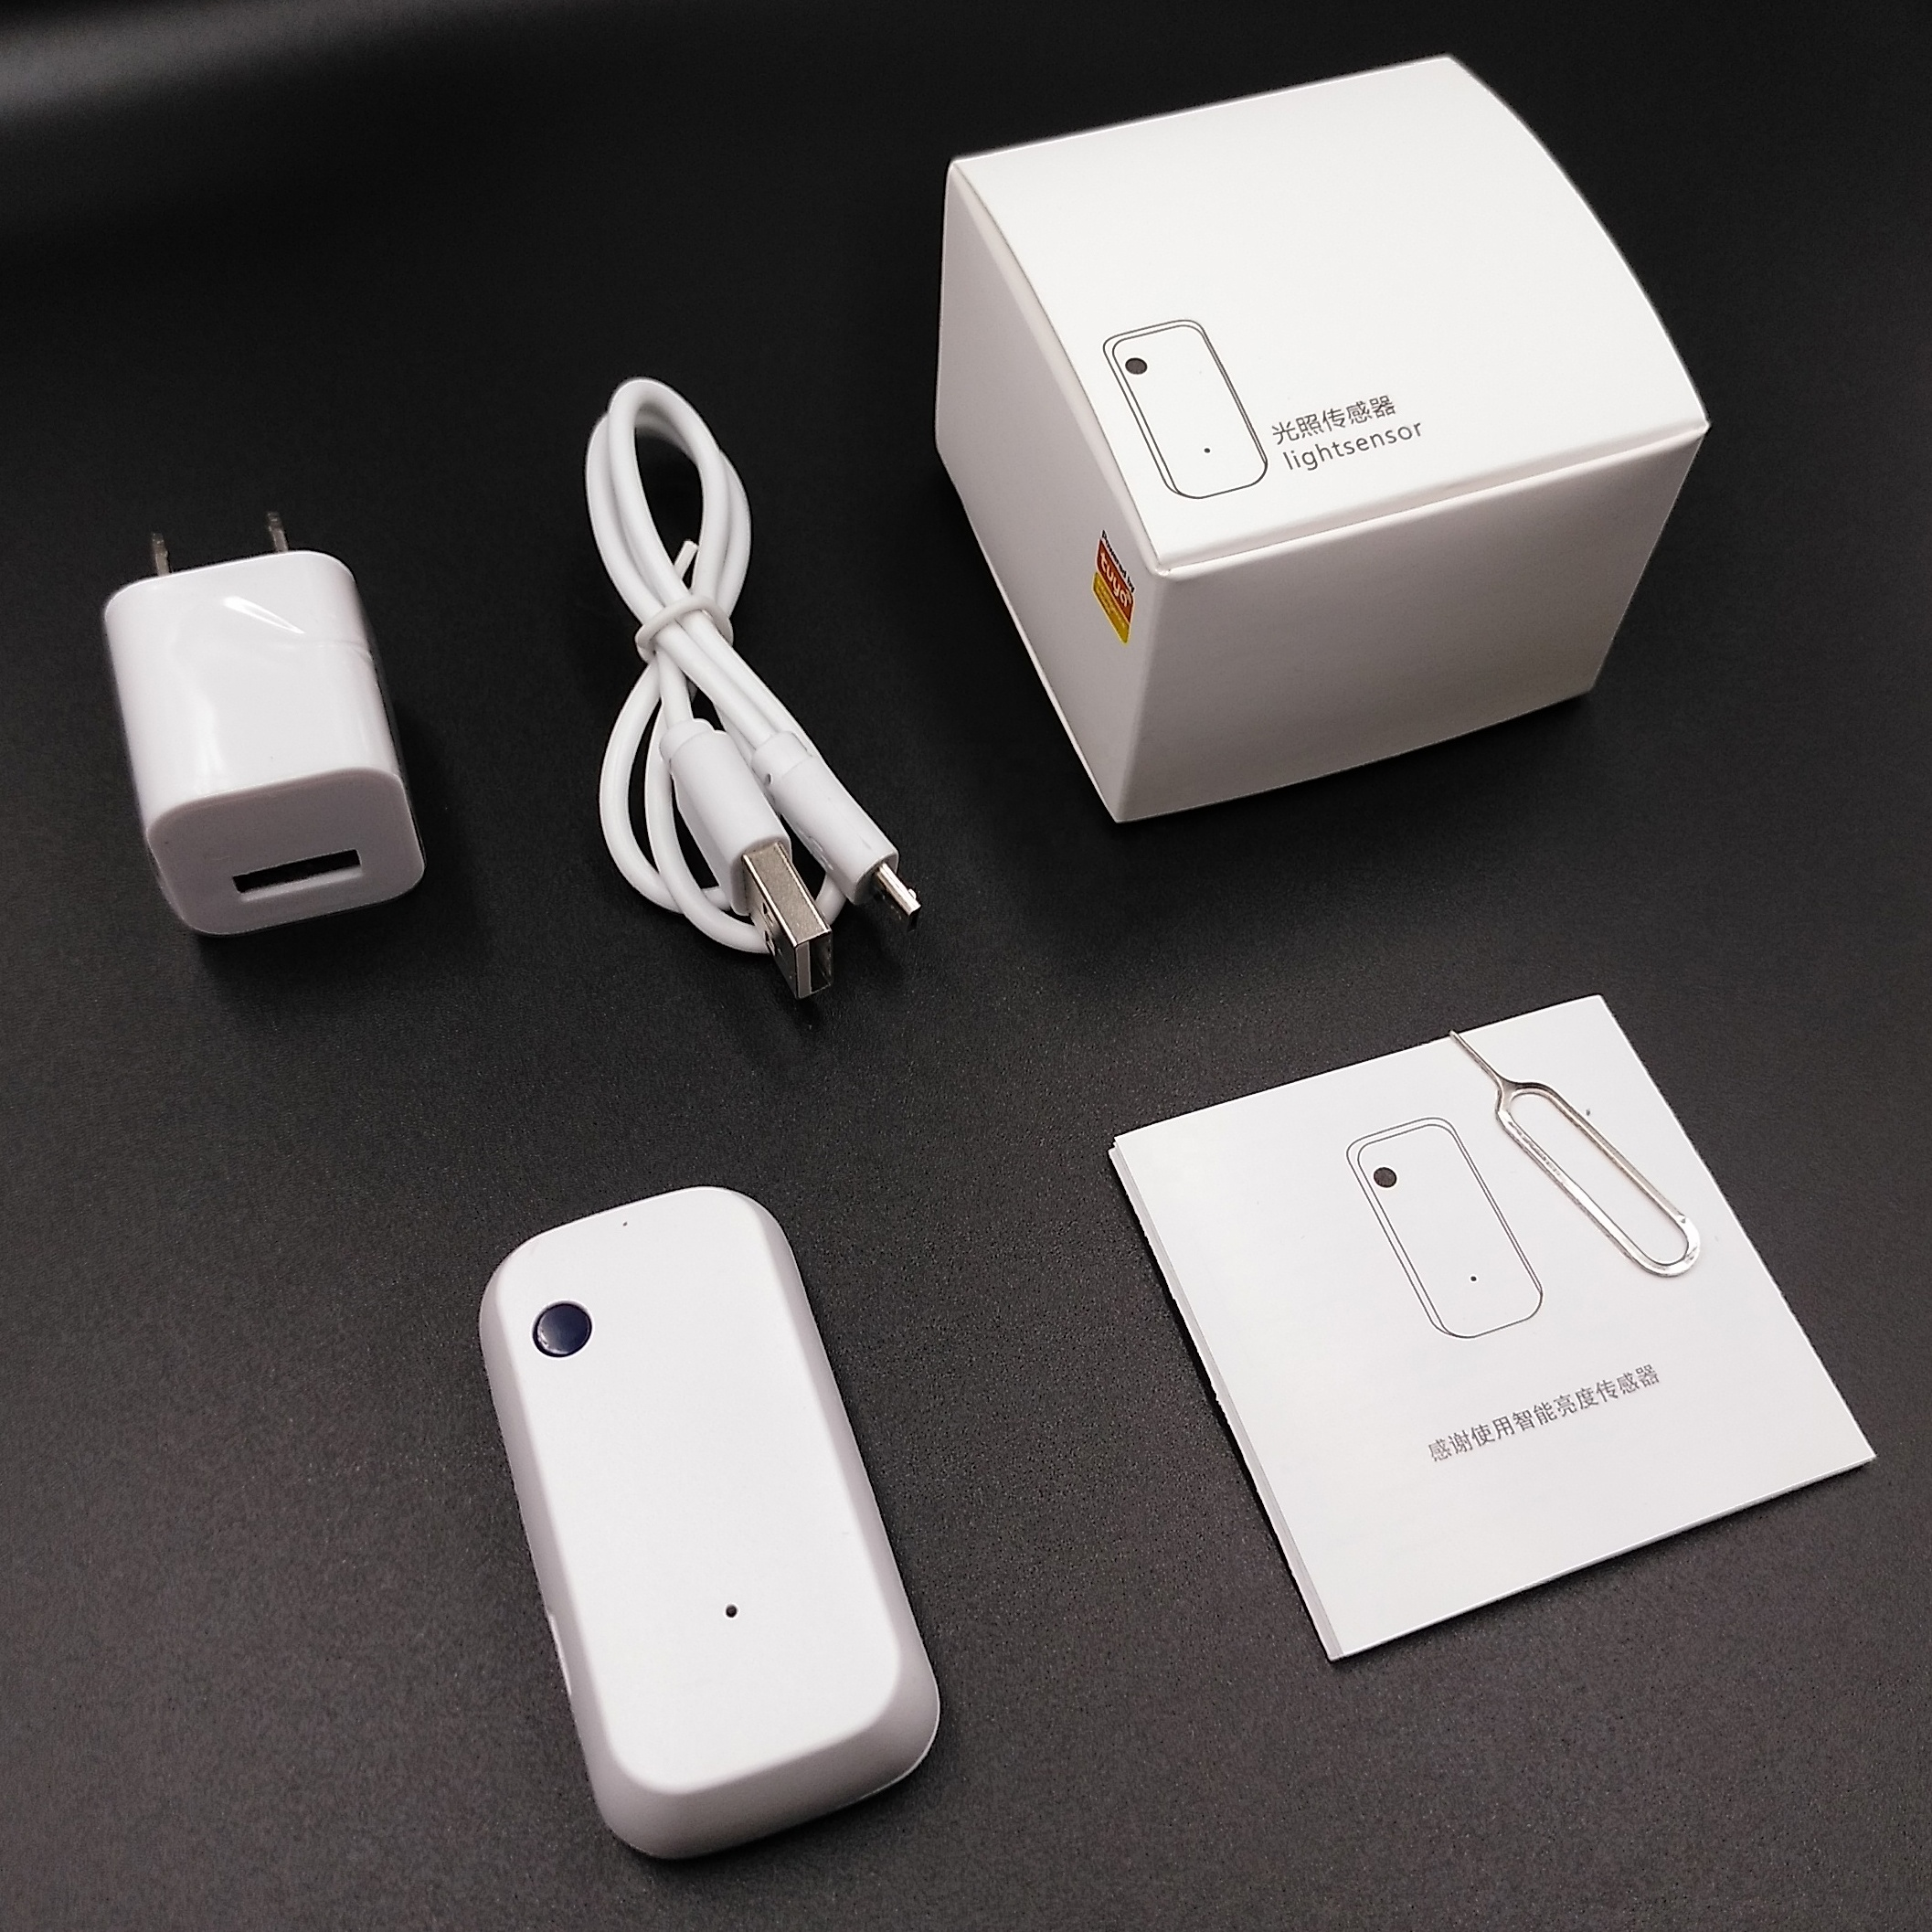 Tuya Smart Sensor Light Automatic Remote Control illuminance Charging USB Wifi Smart Light Sensor Work With Alexa/Google